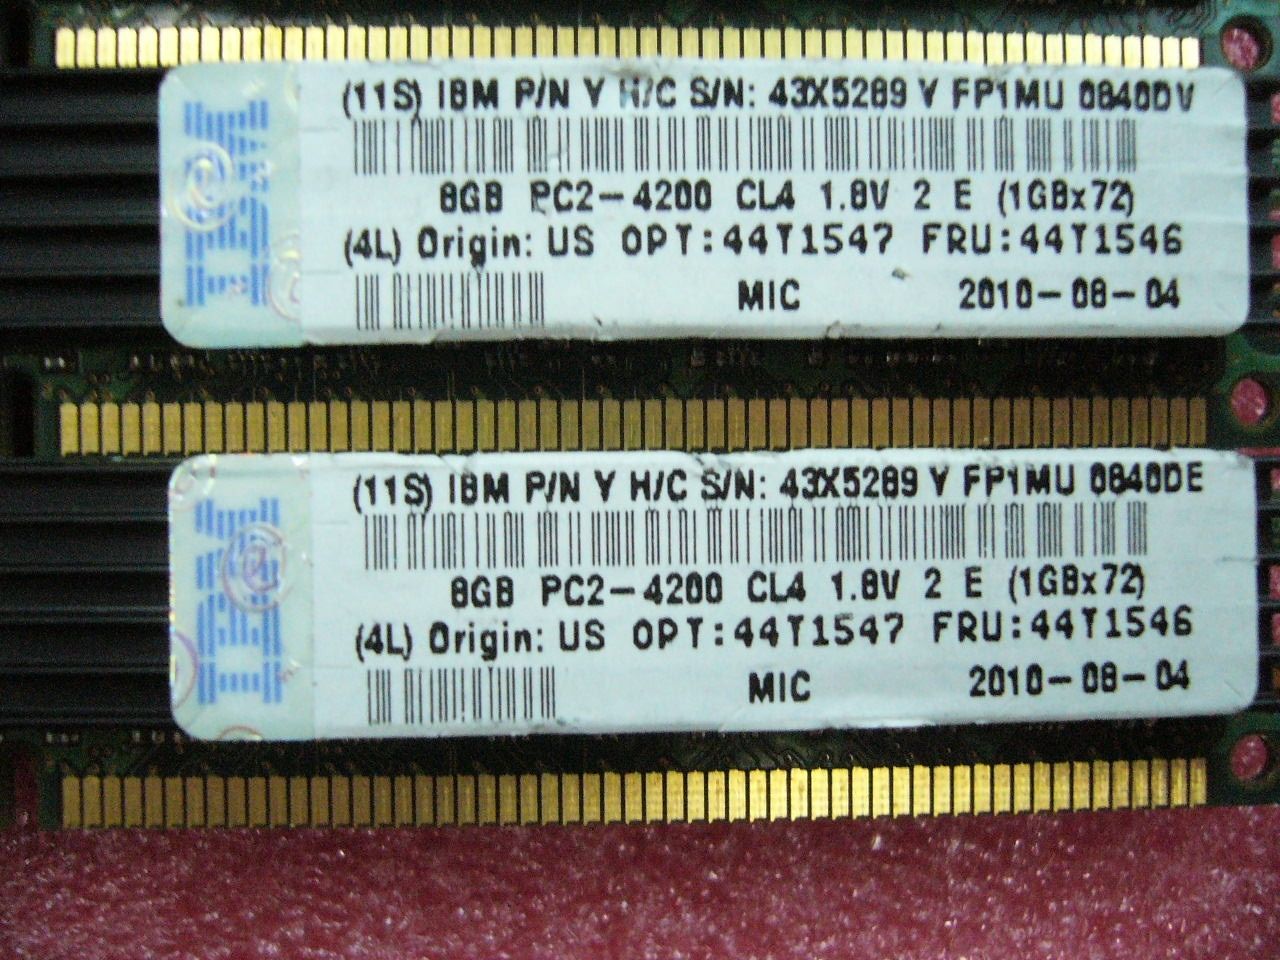 QTY 1x 8GB DDR2 PC2-4200R VLP ECC Registered Server memory IBM 44T1546 44T1545 - Click Image to Close